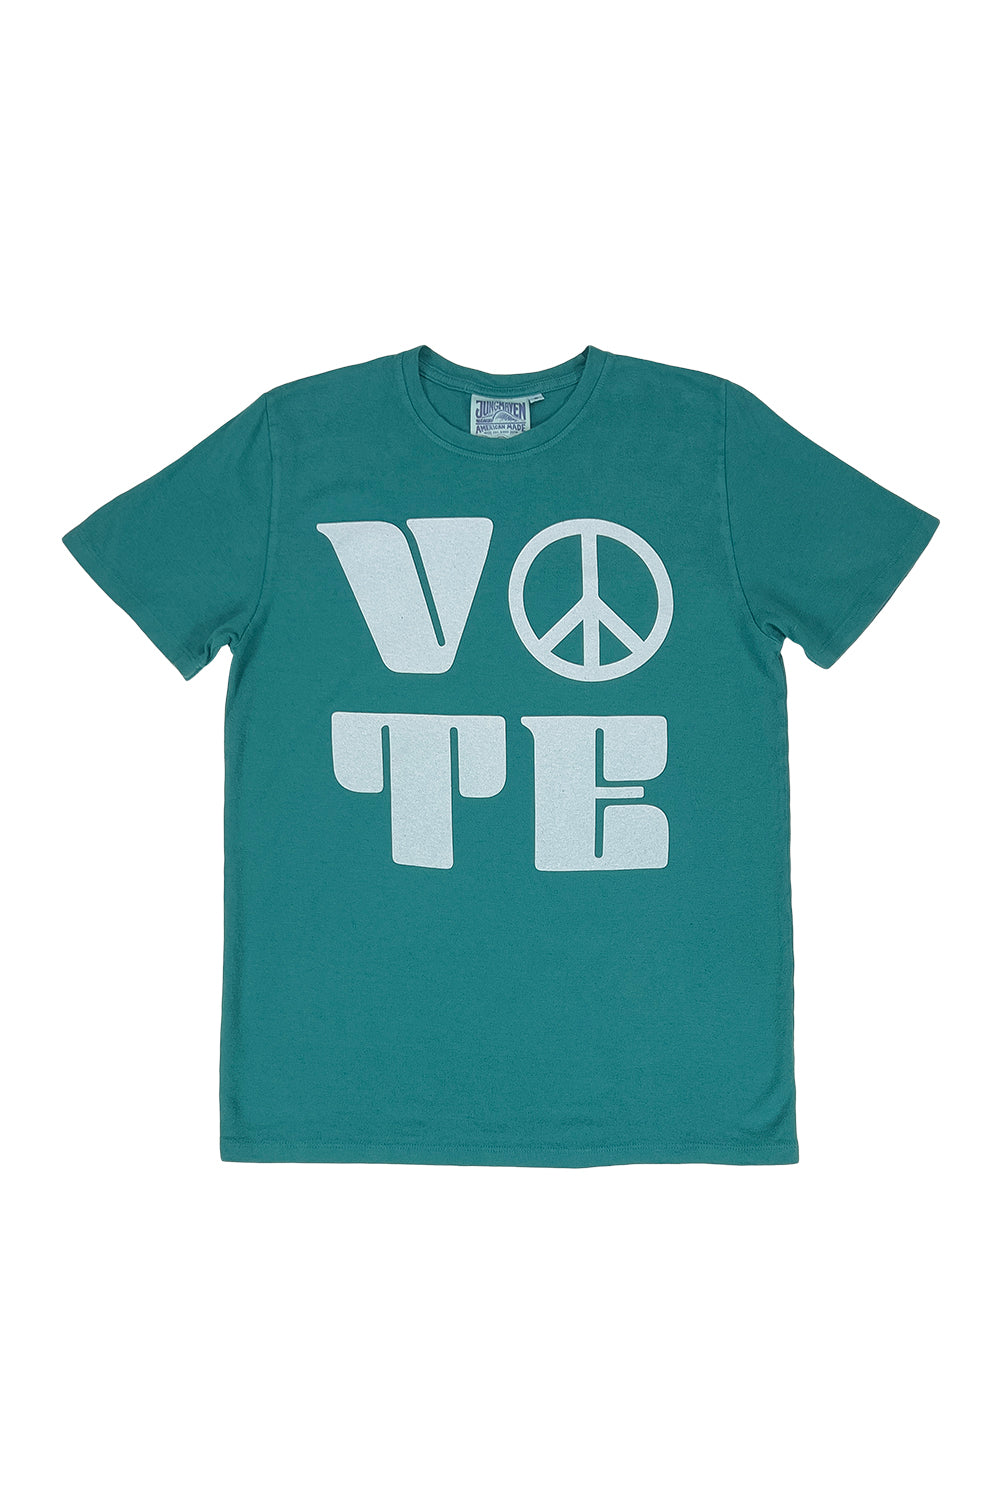 Vote Peace Baja Tee | Jungmaven Hemp Clothing & Accessories / Color:Jade Green